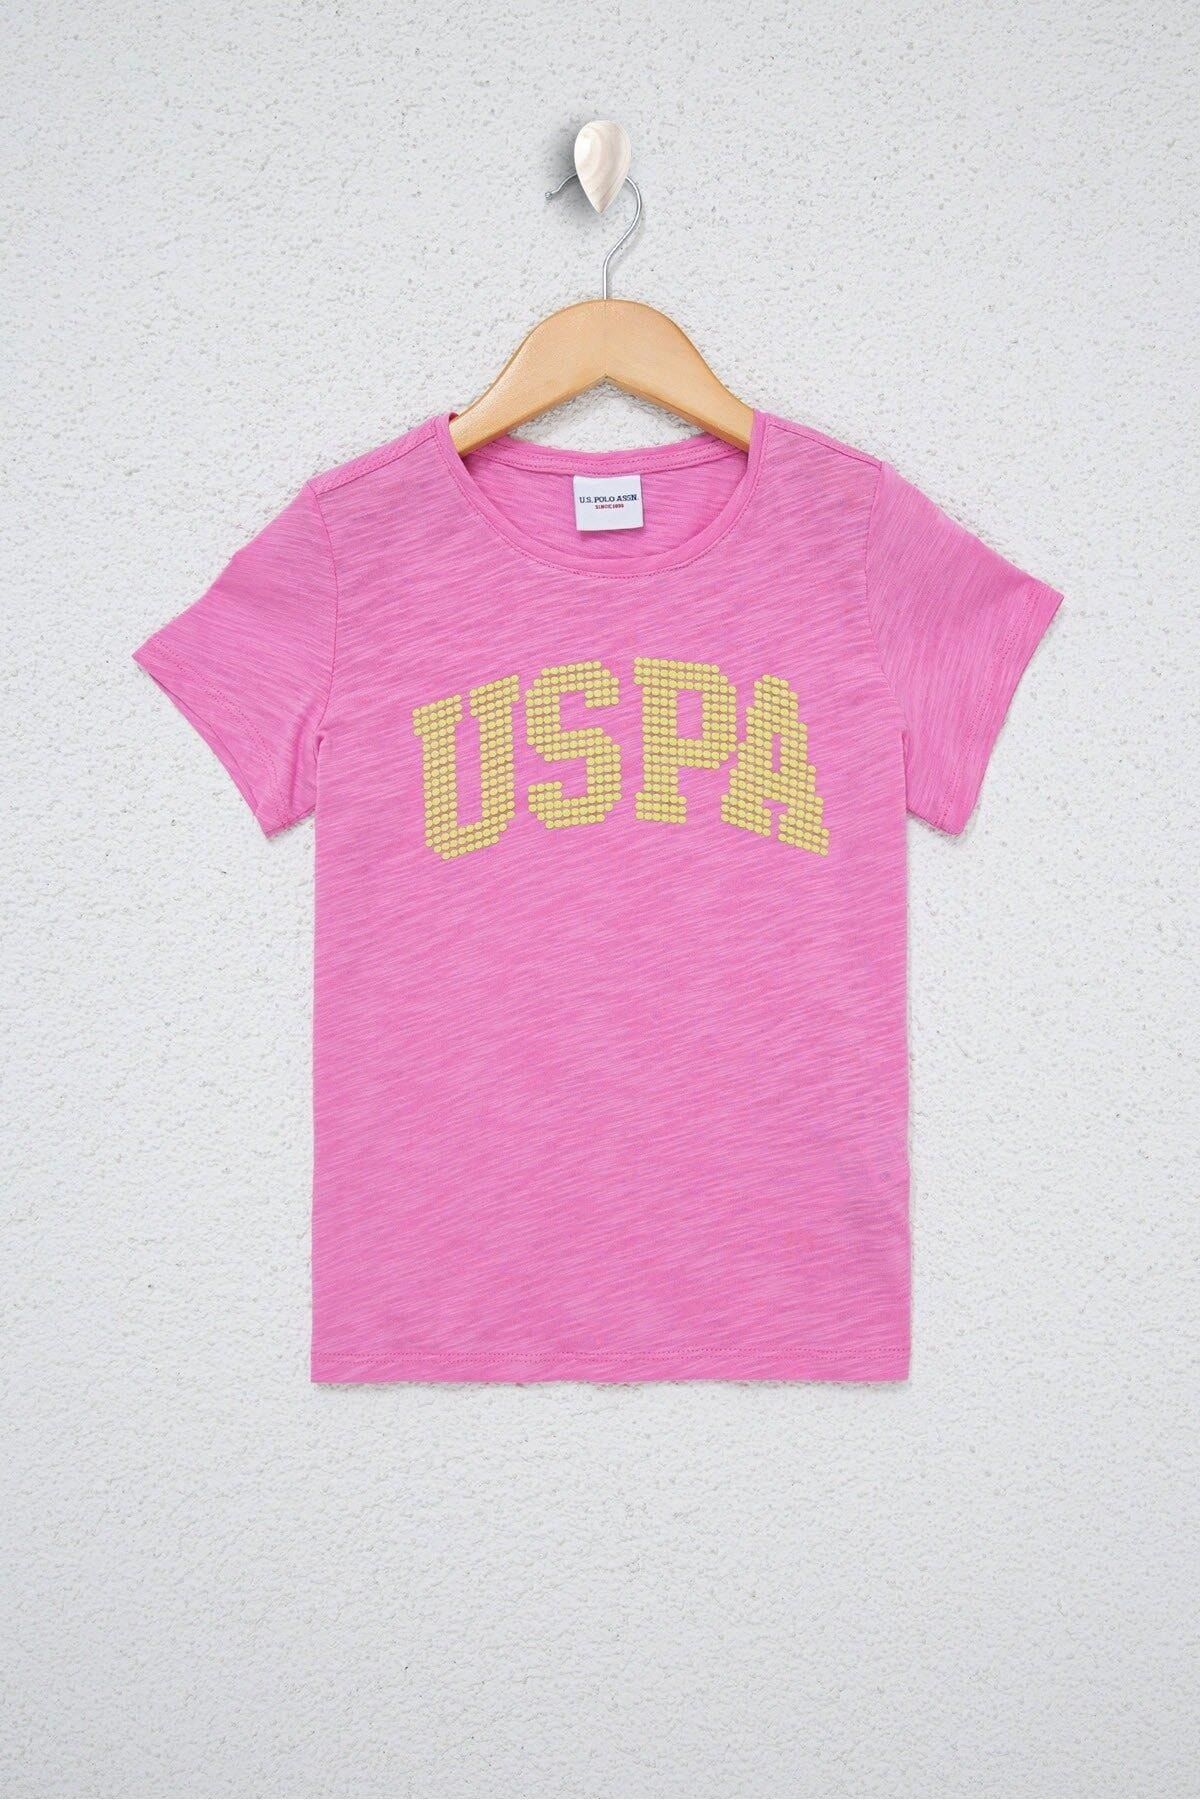 U.S. Polo Assn. Us Polo Assn Pembe Kız Çocuk T-shirt